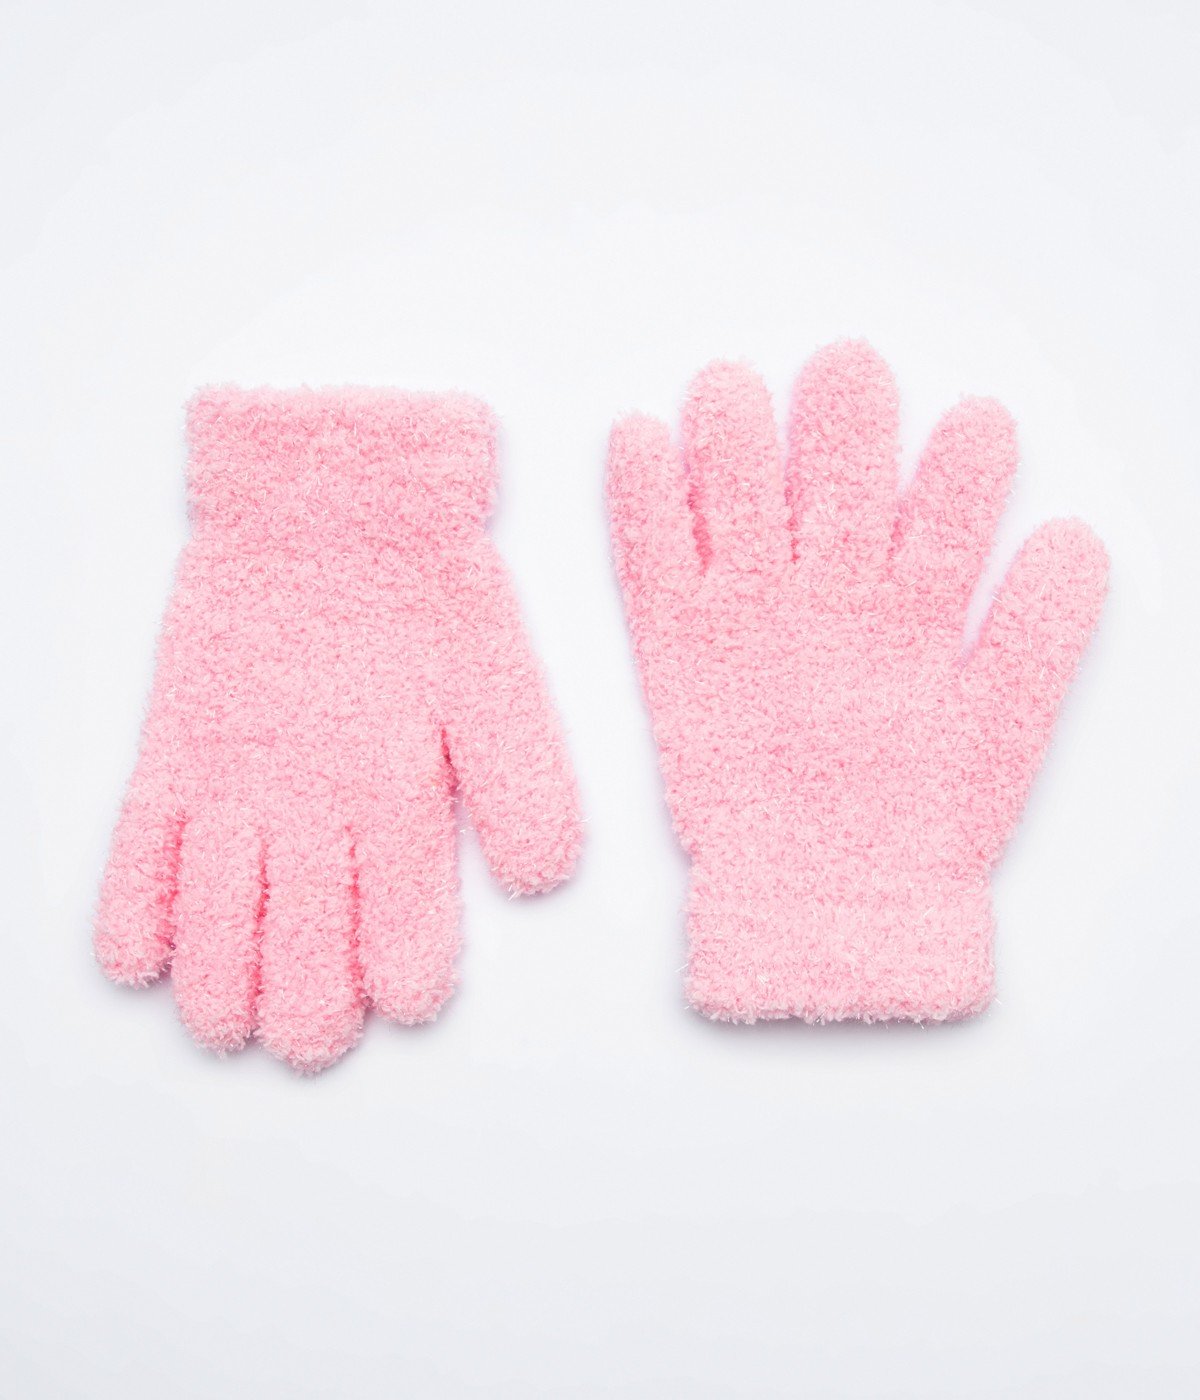 Mănuși Fetițe Softy